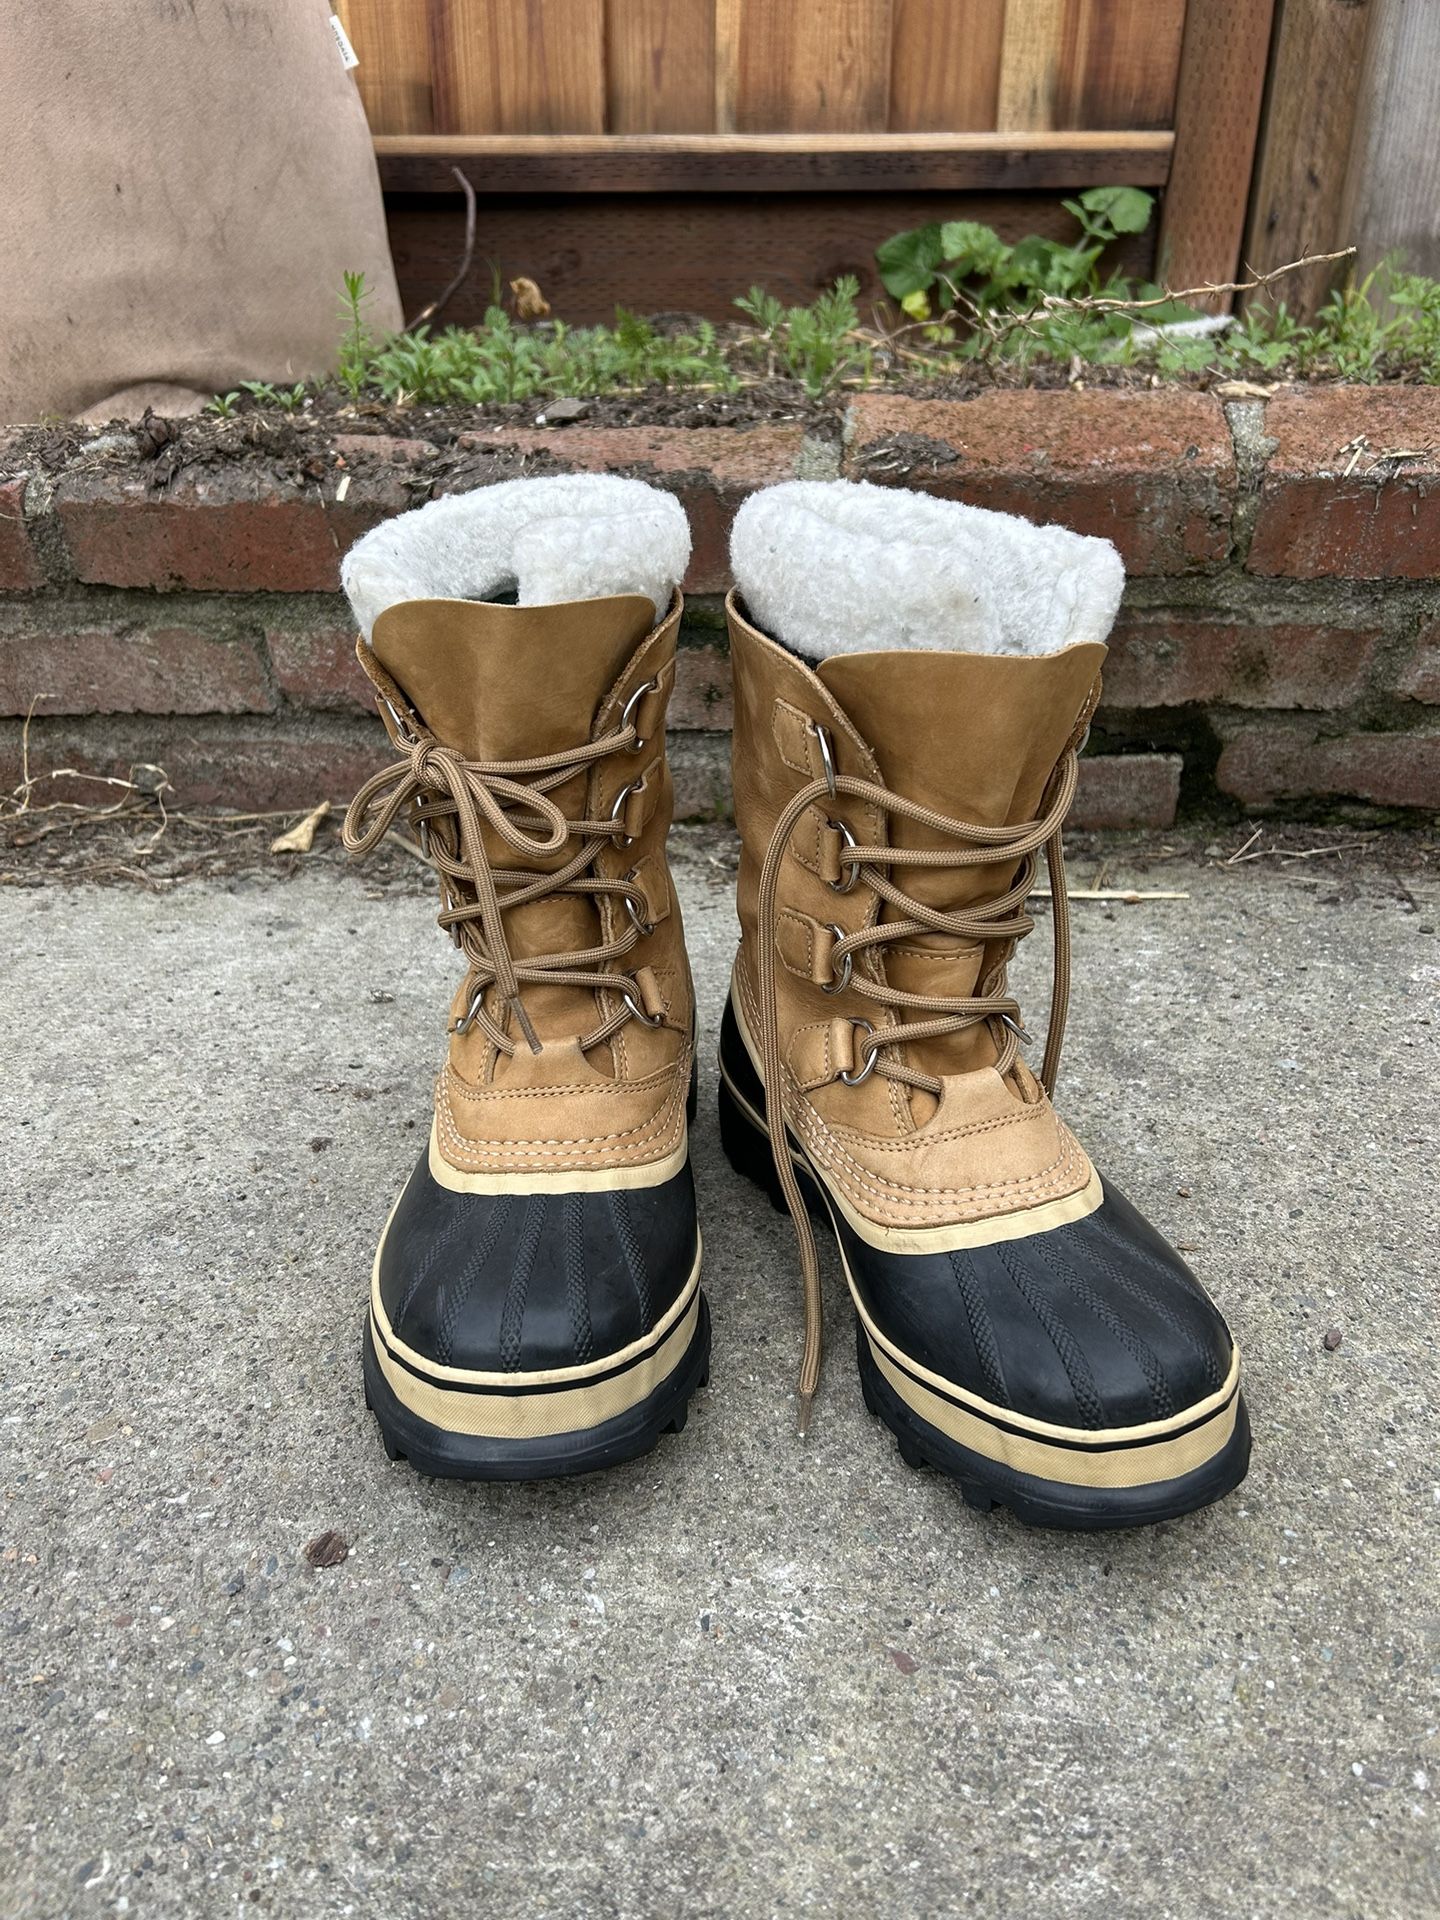 Sorel Winter Boots Size 8